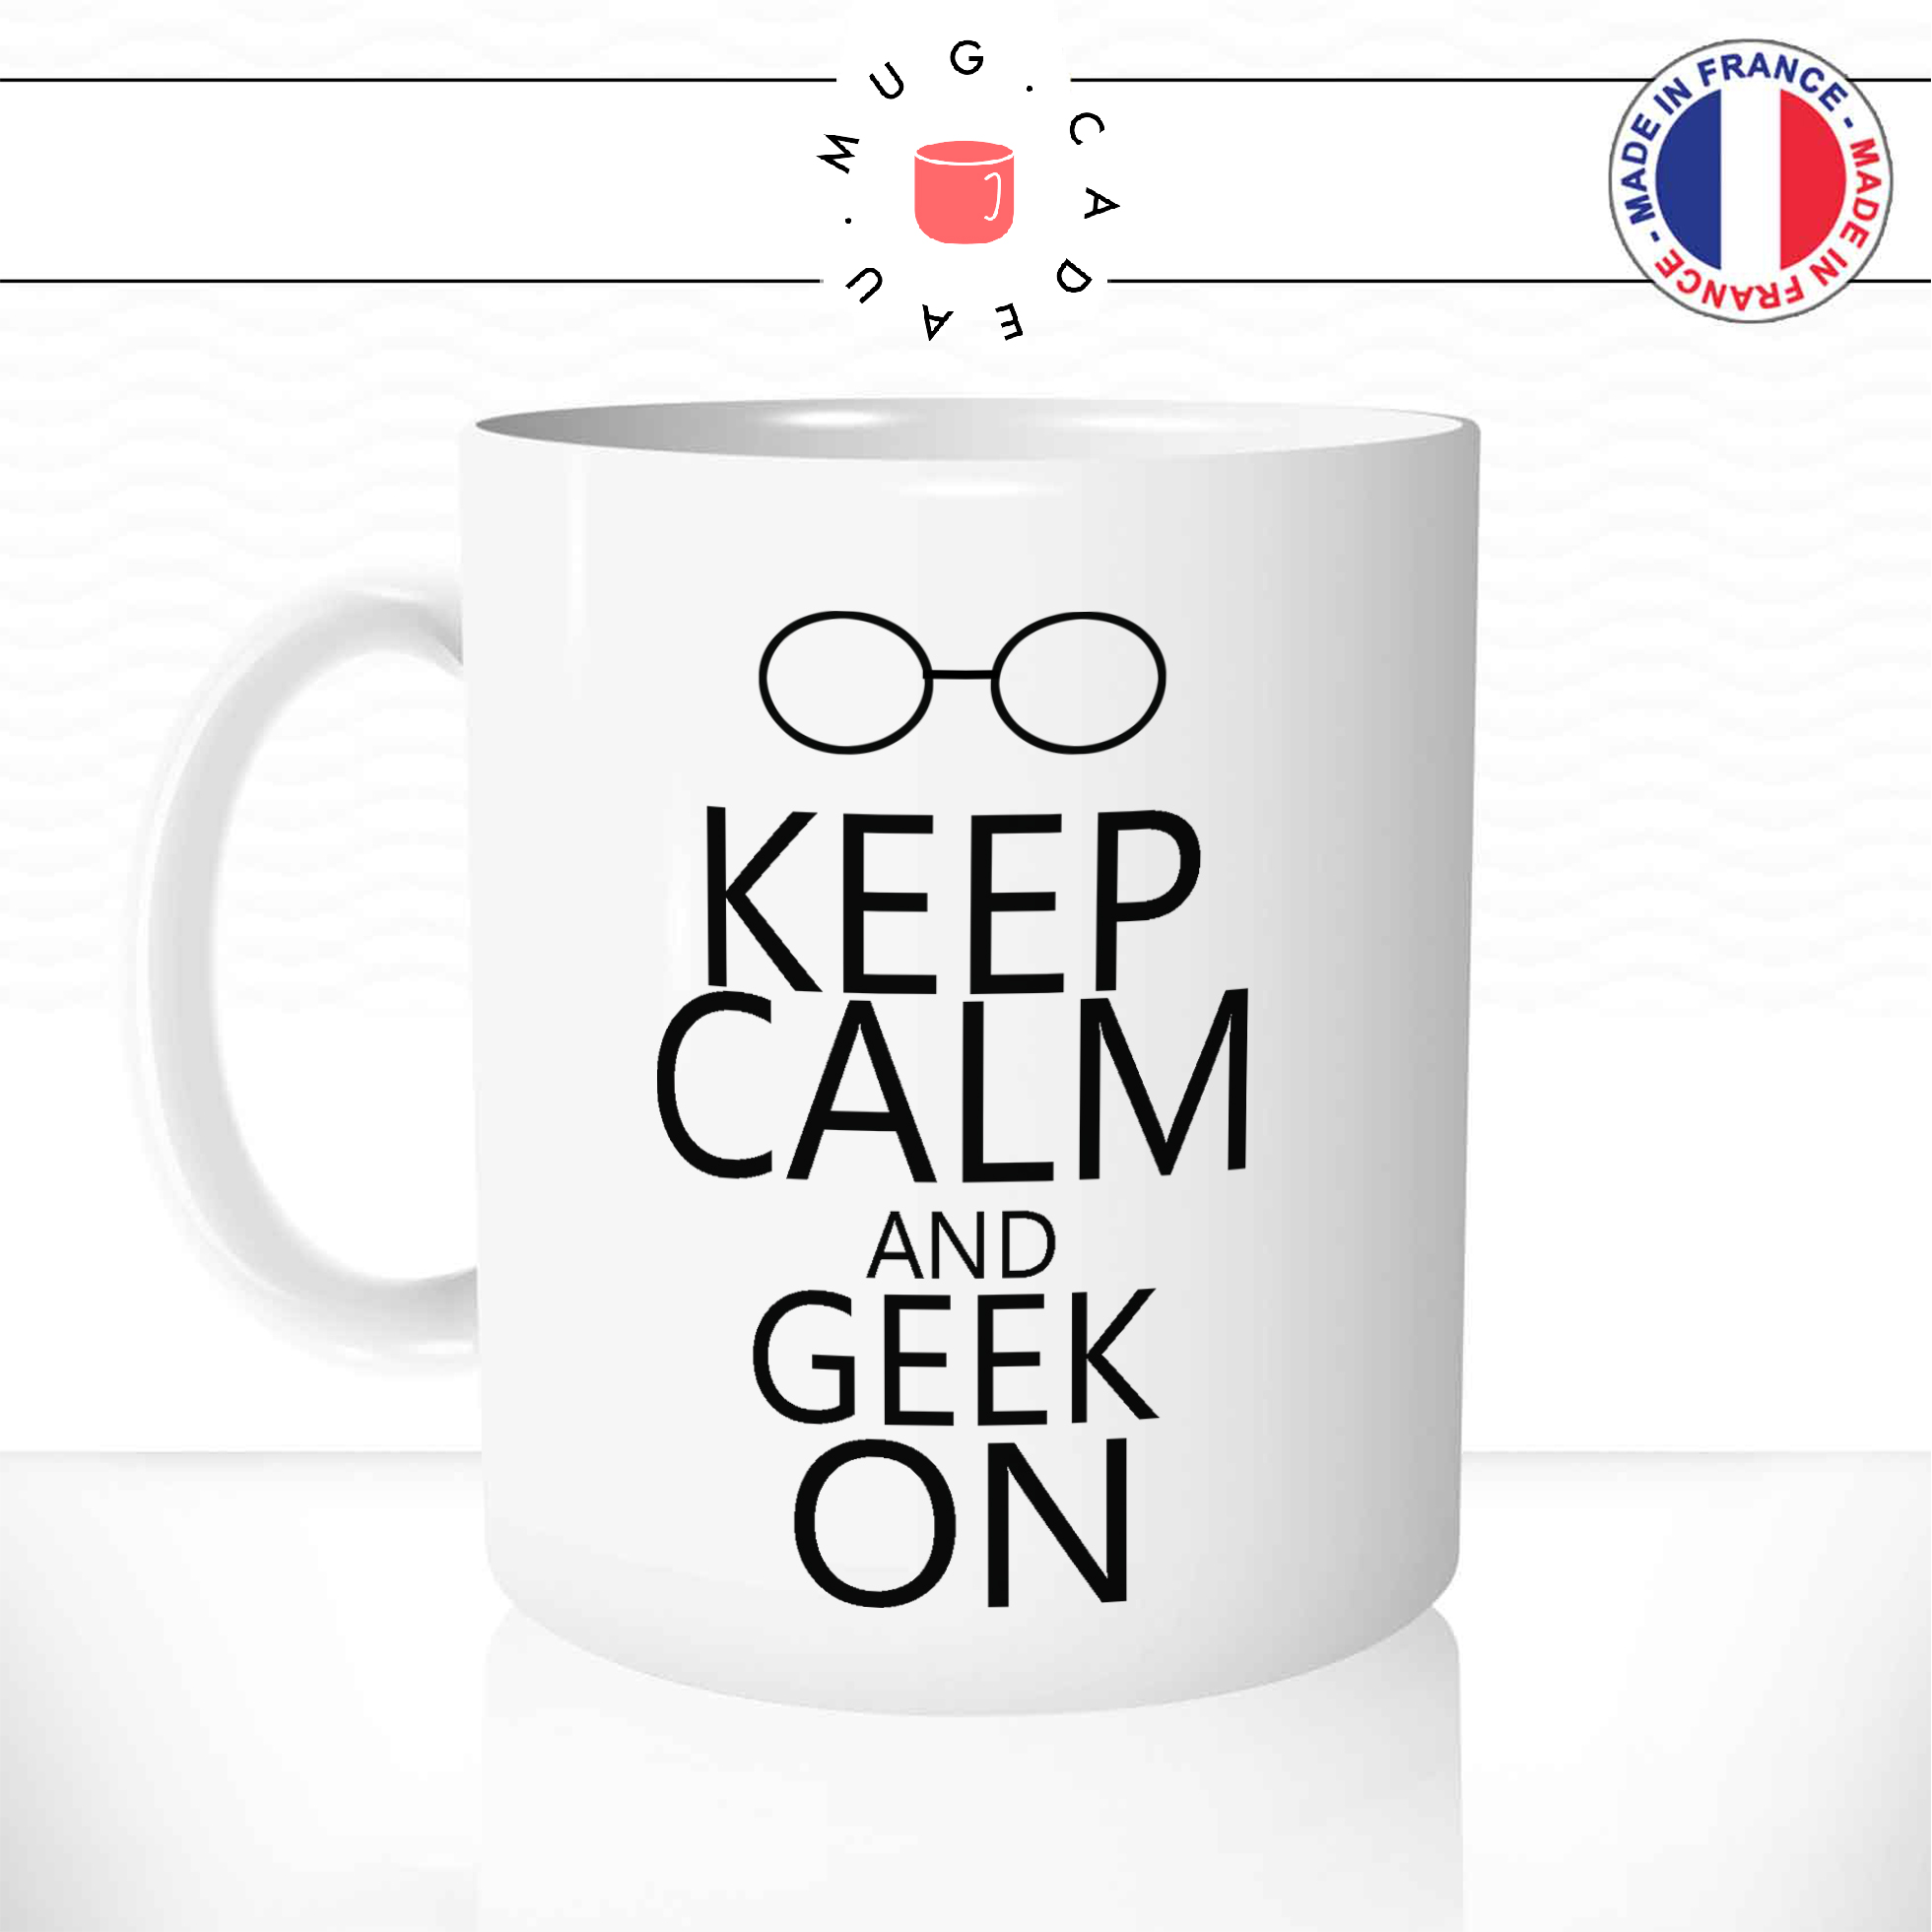 mug-tasse-ref4-keep-calm-and-geek-on-cafe-the-mugs-tasses-personnalise-anse-gauche